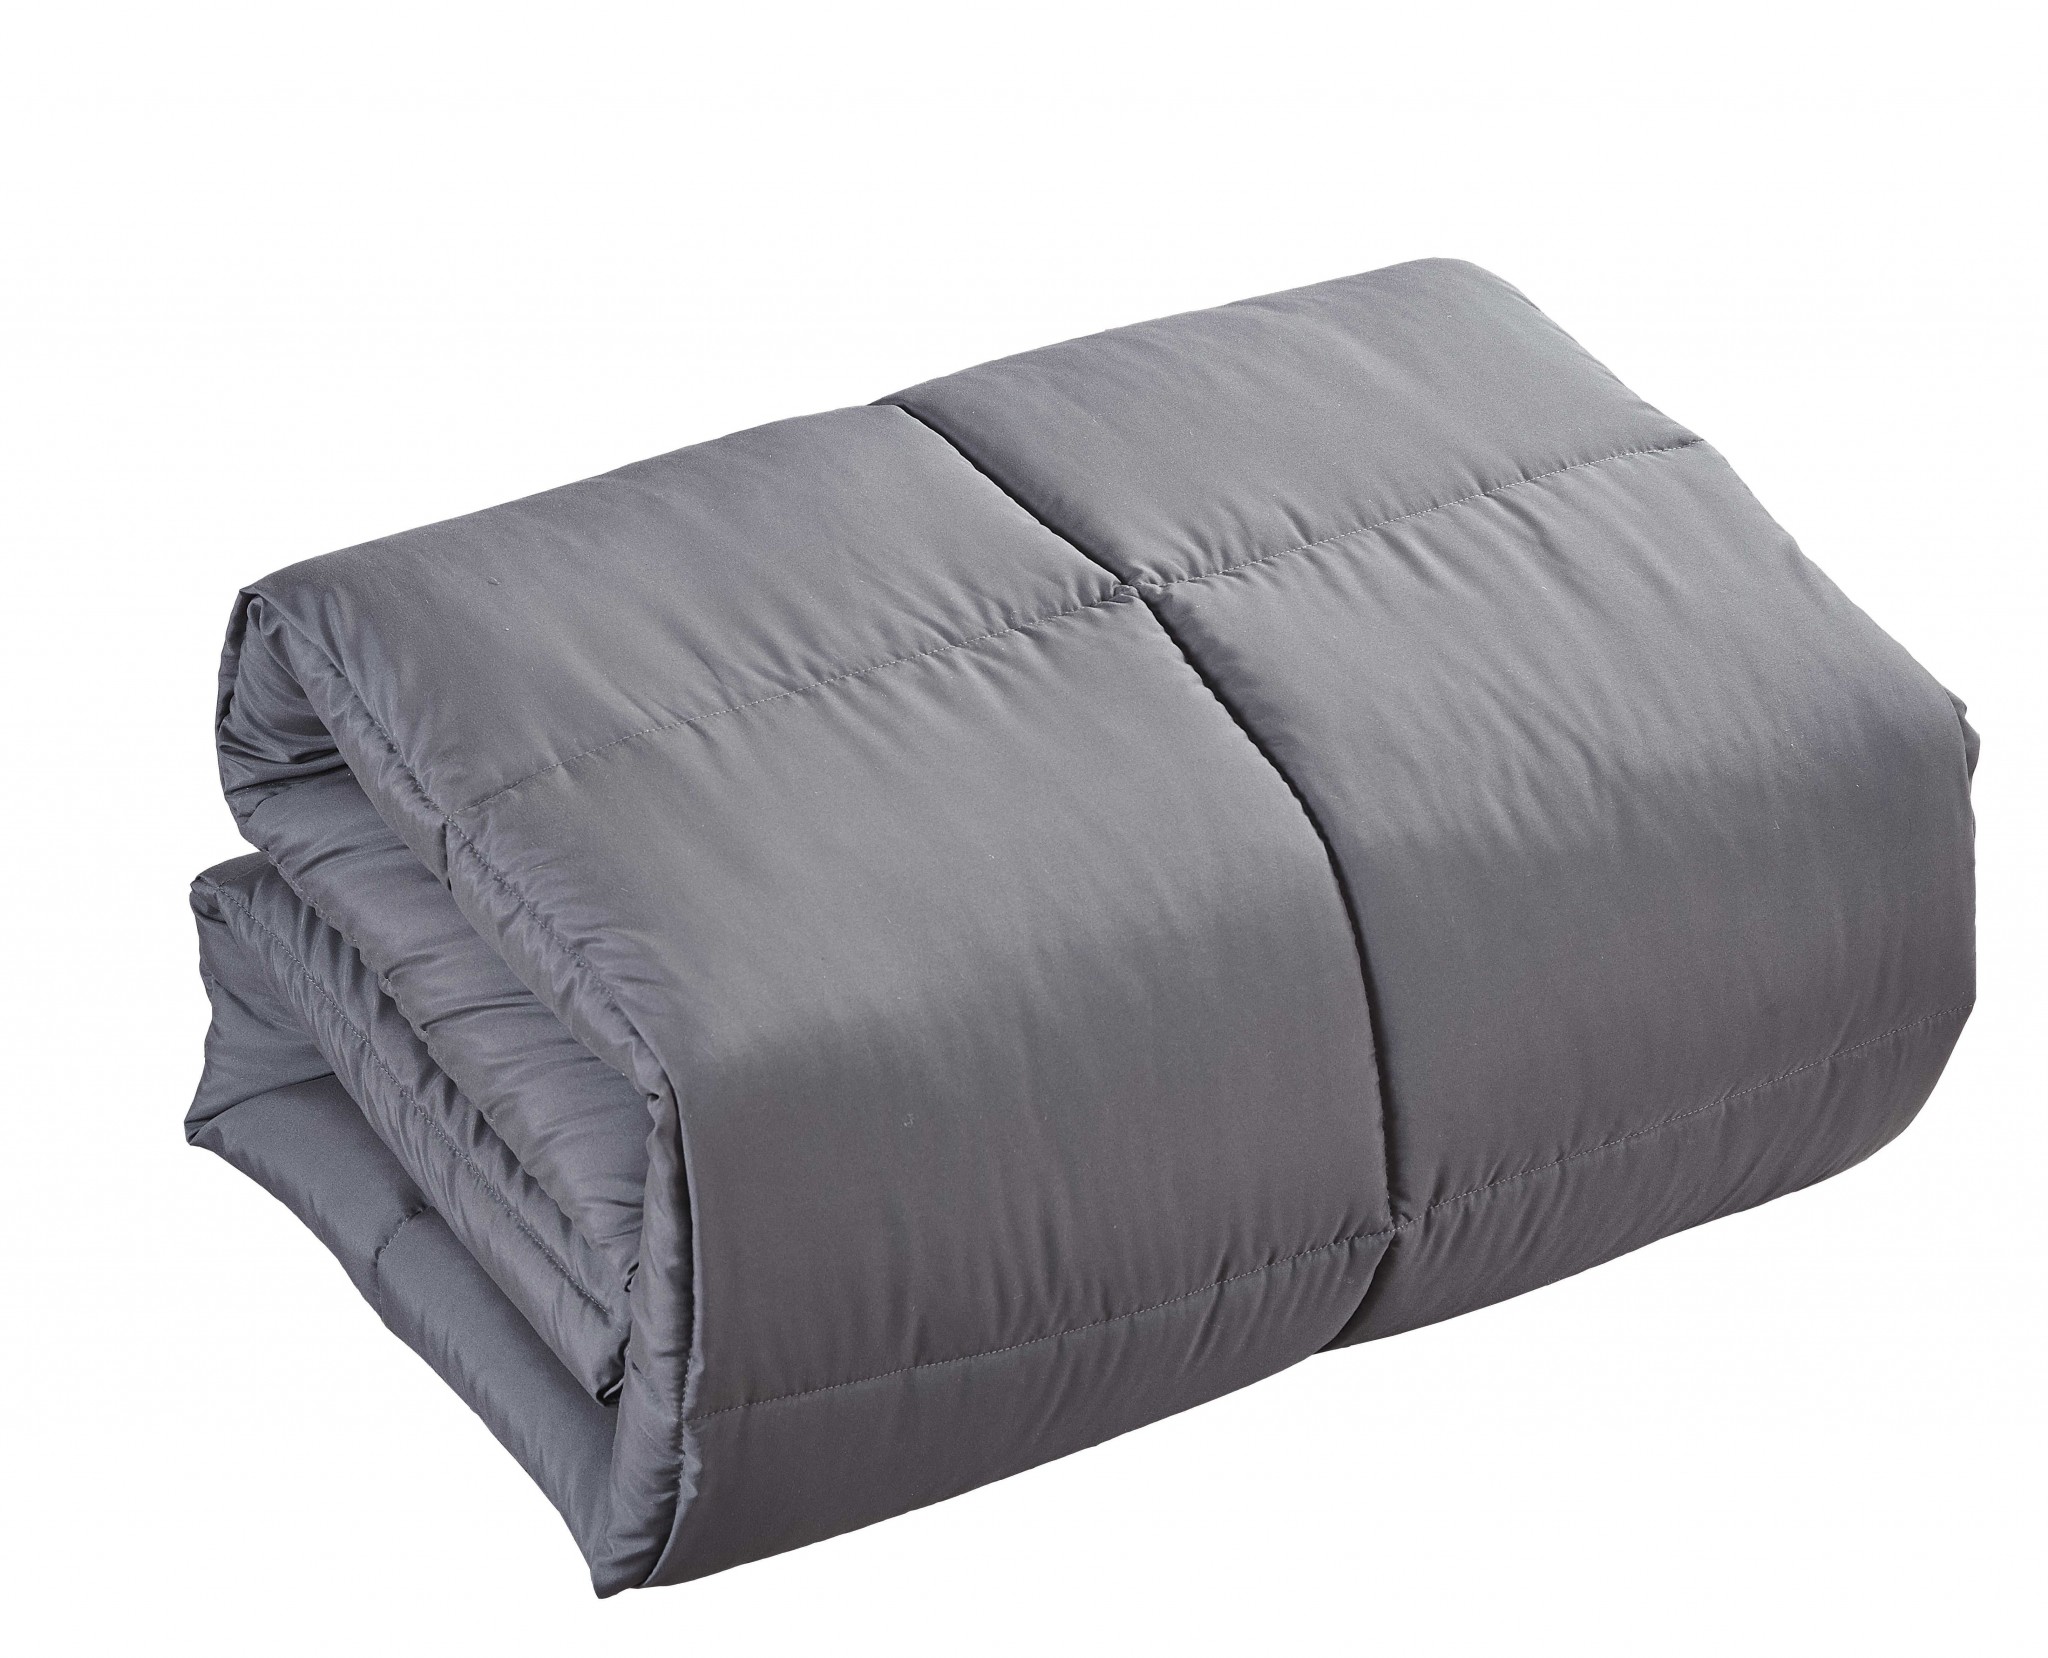 Polyester Medium Warmth Down Alternative Comforter Duvet Insert California King/Eastern King (104" x 88", Grey)